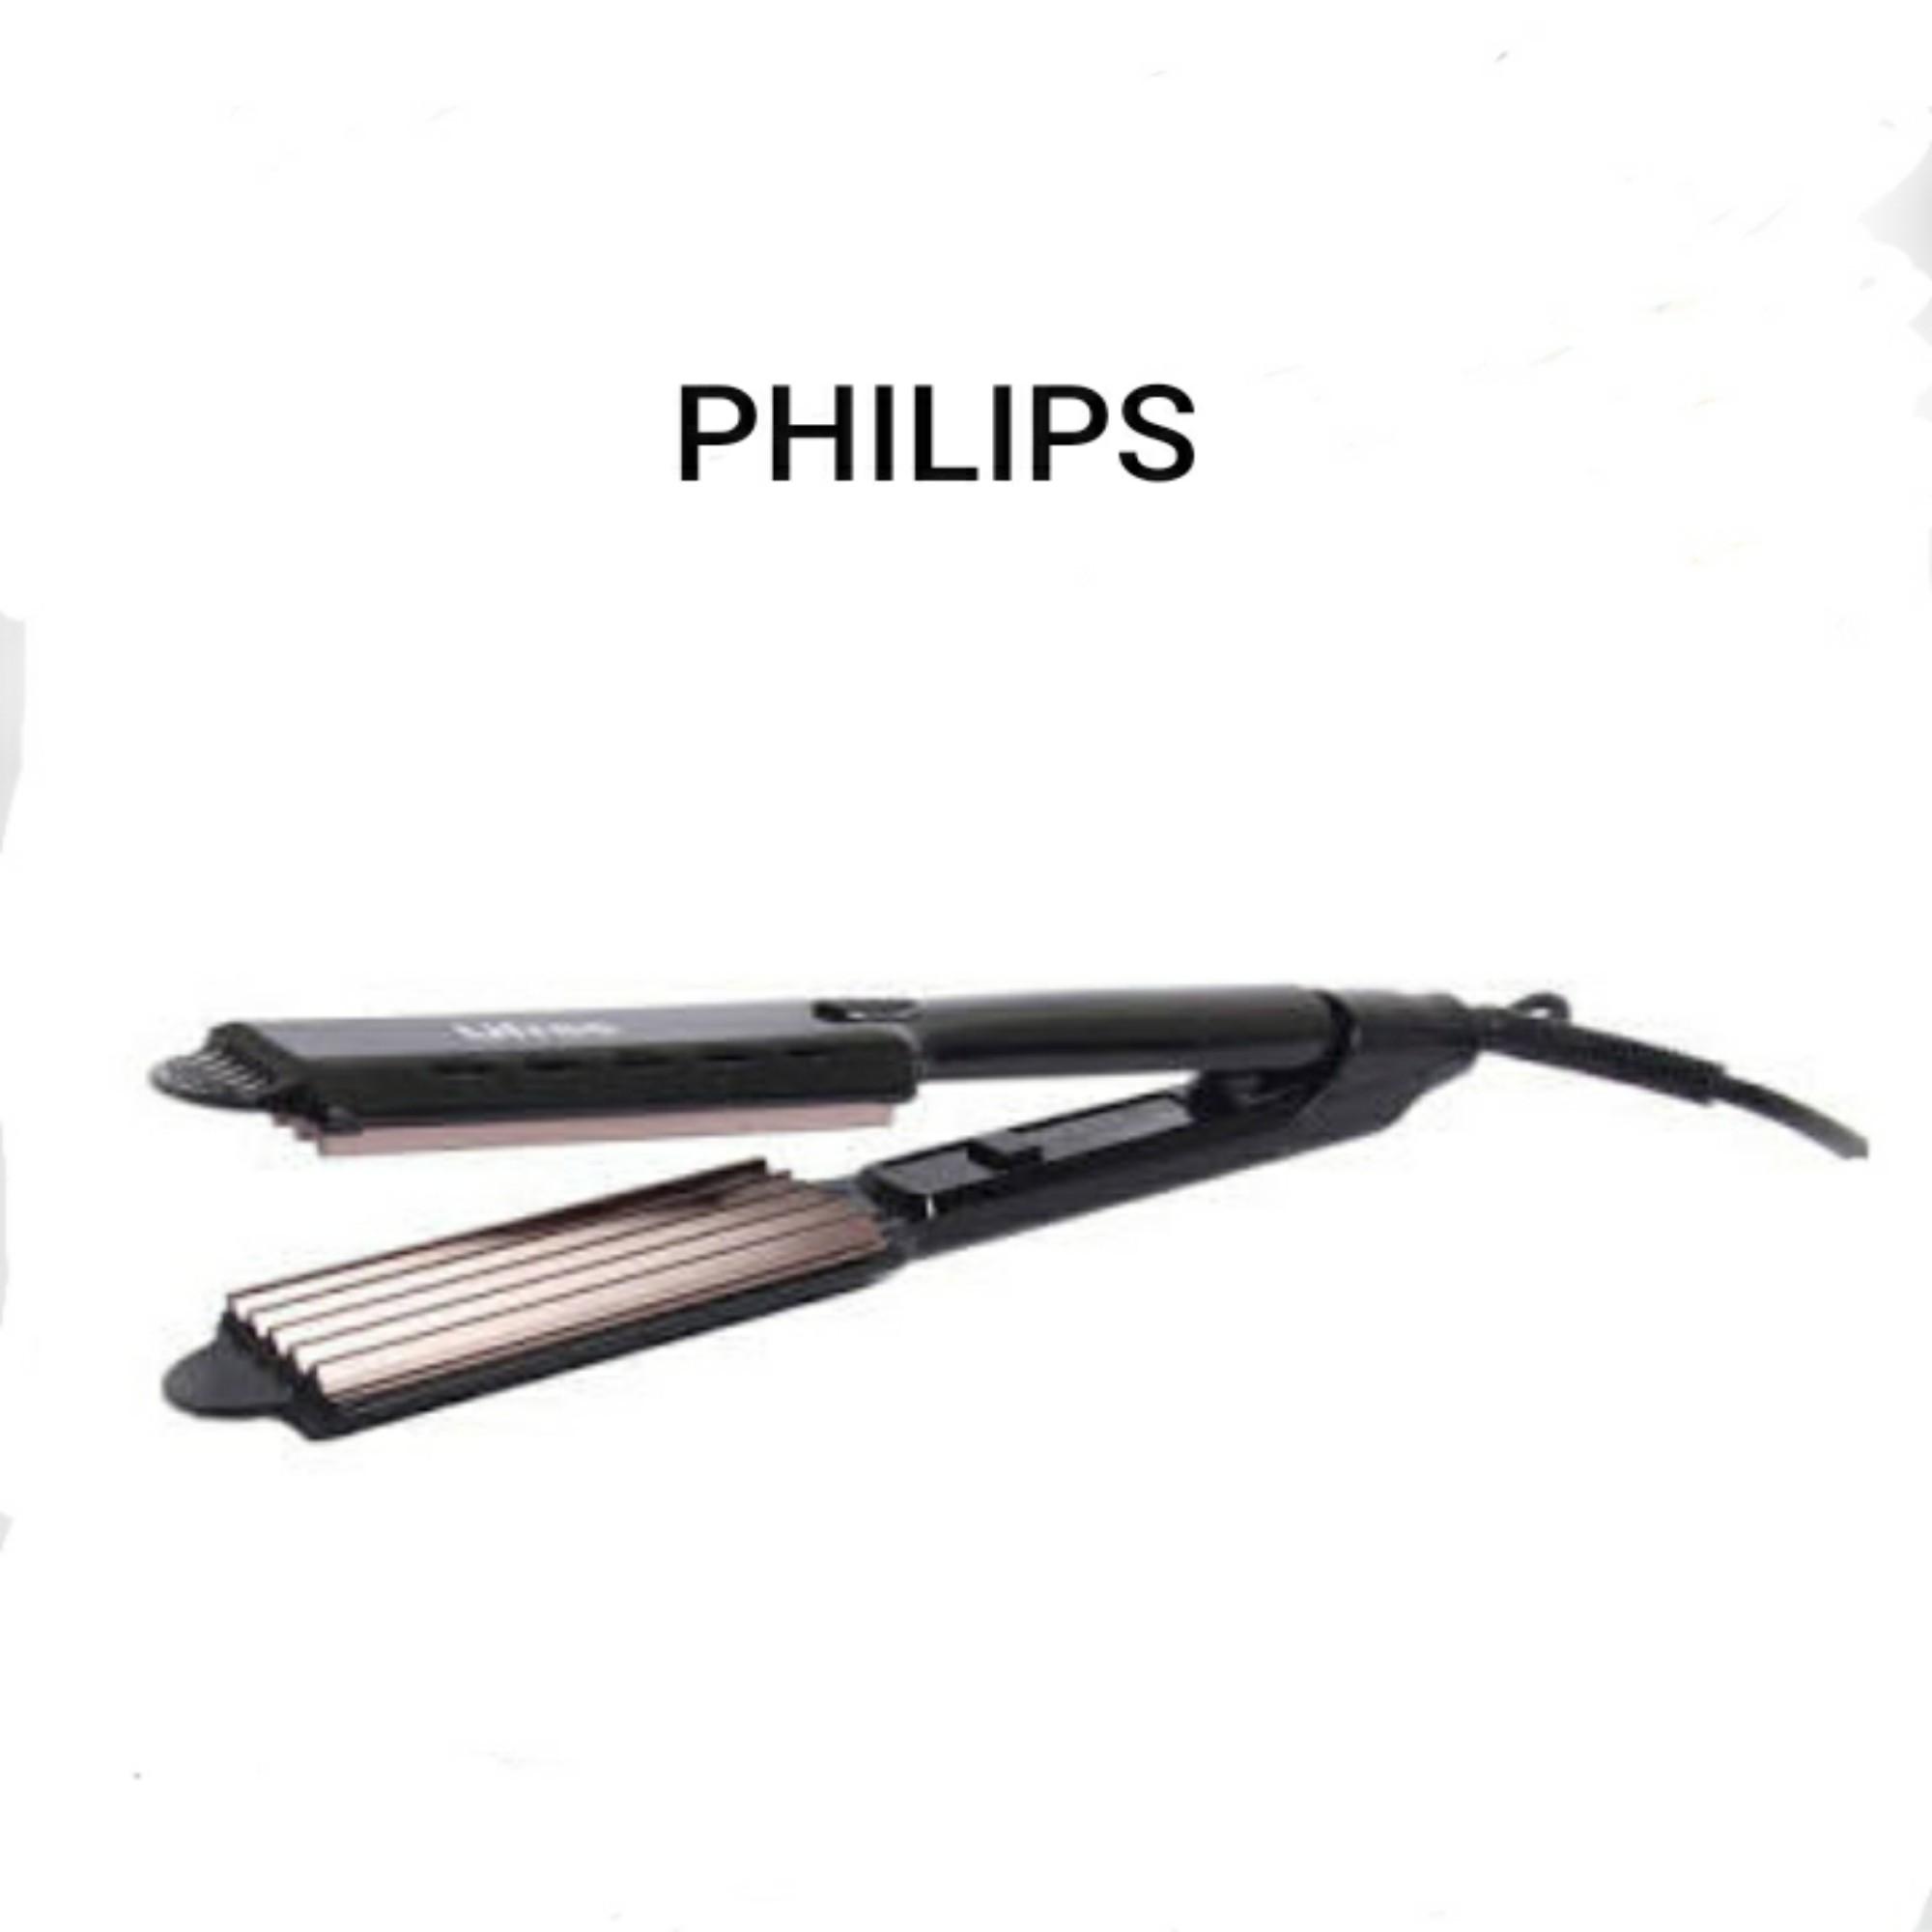 philips hair crimper machine